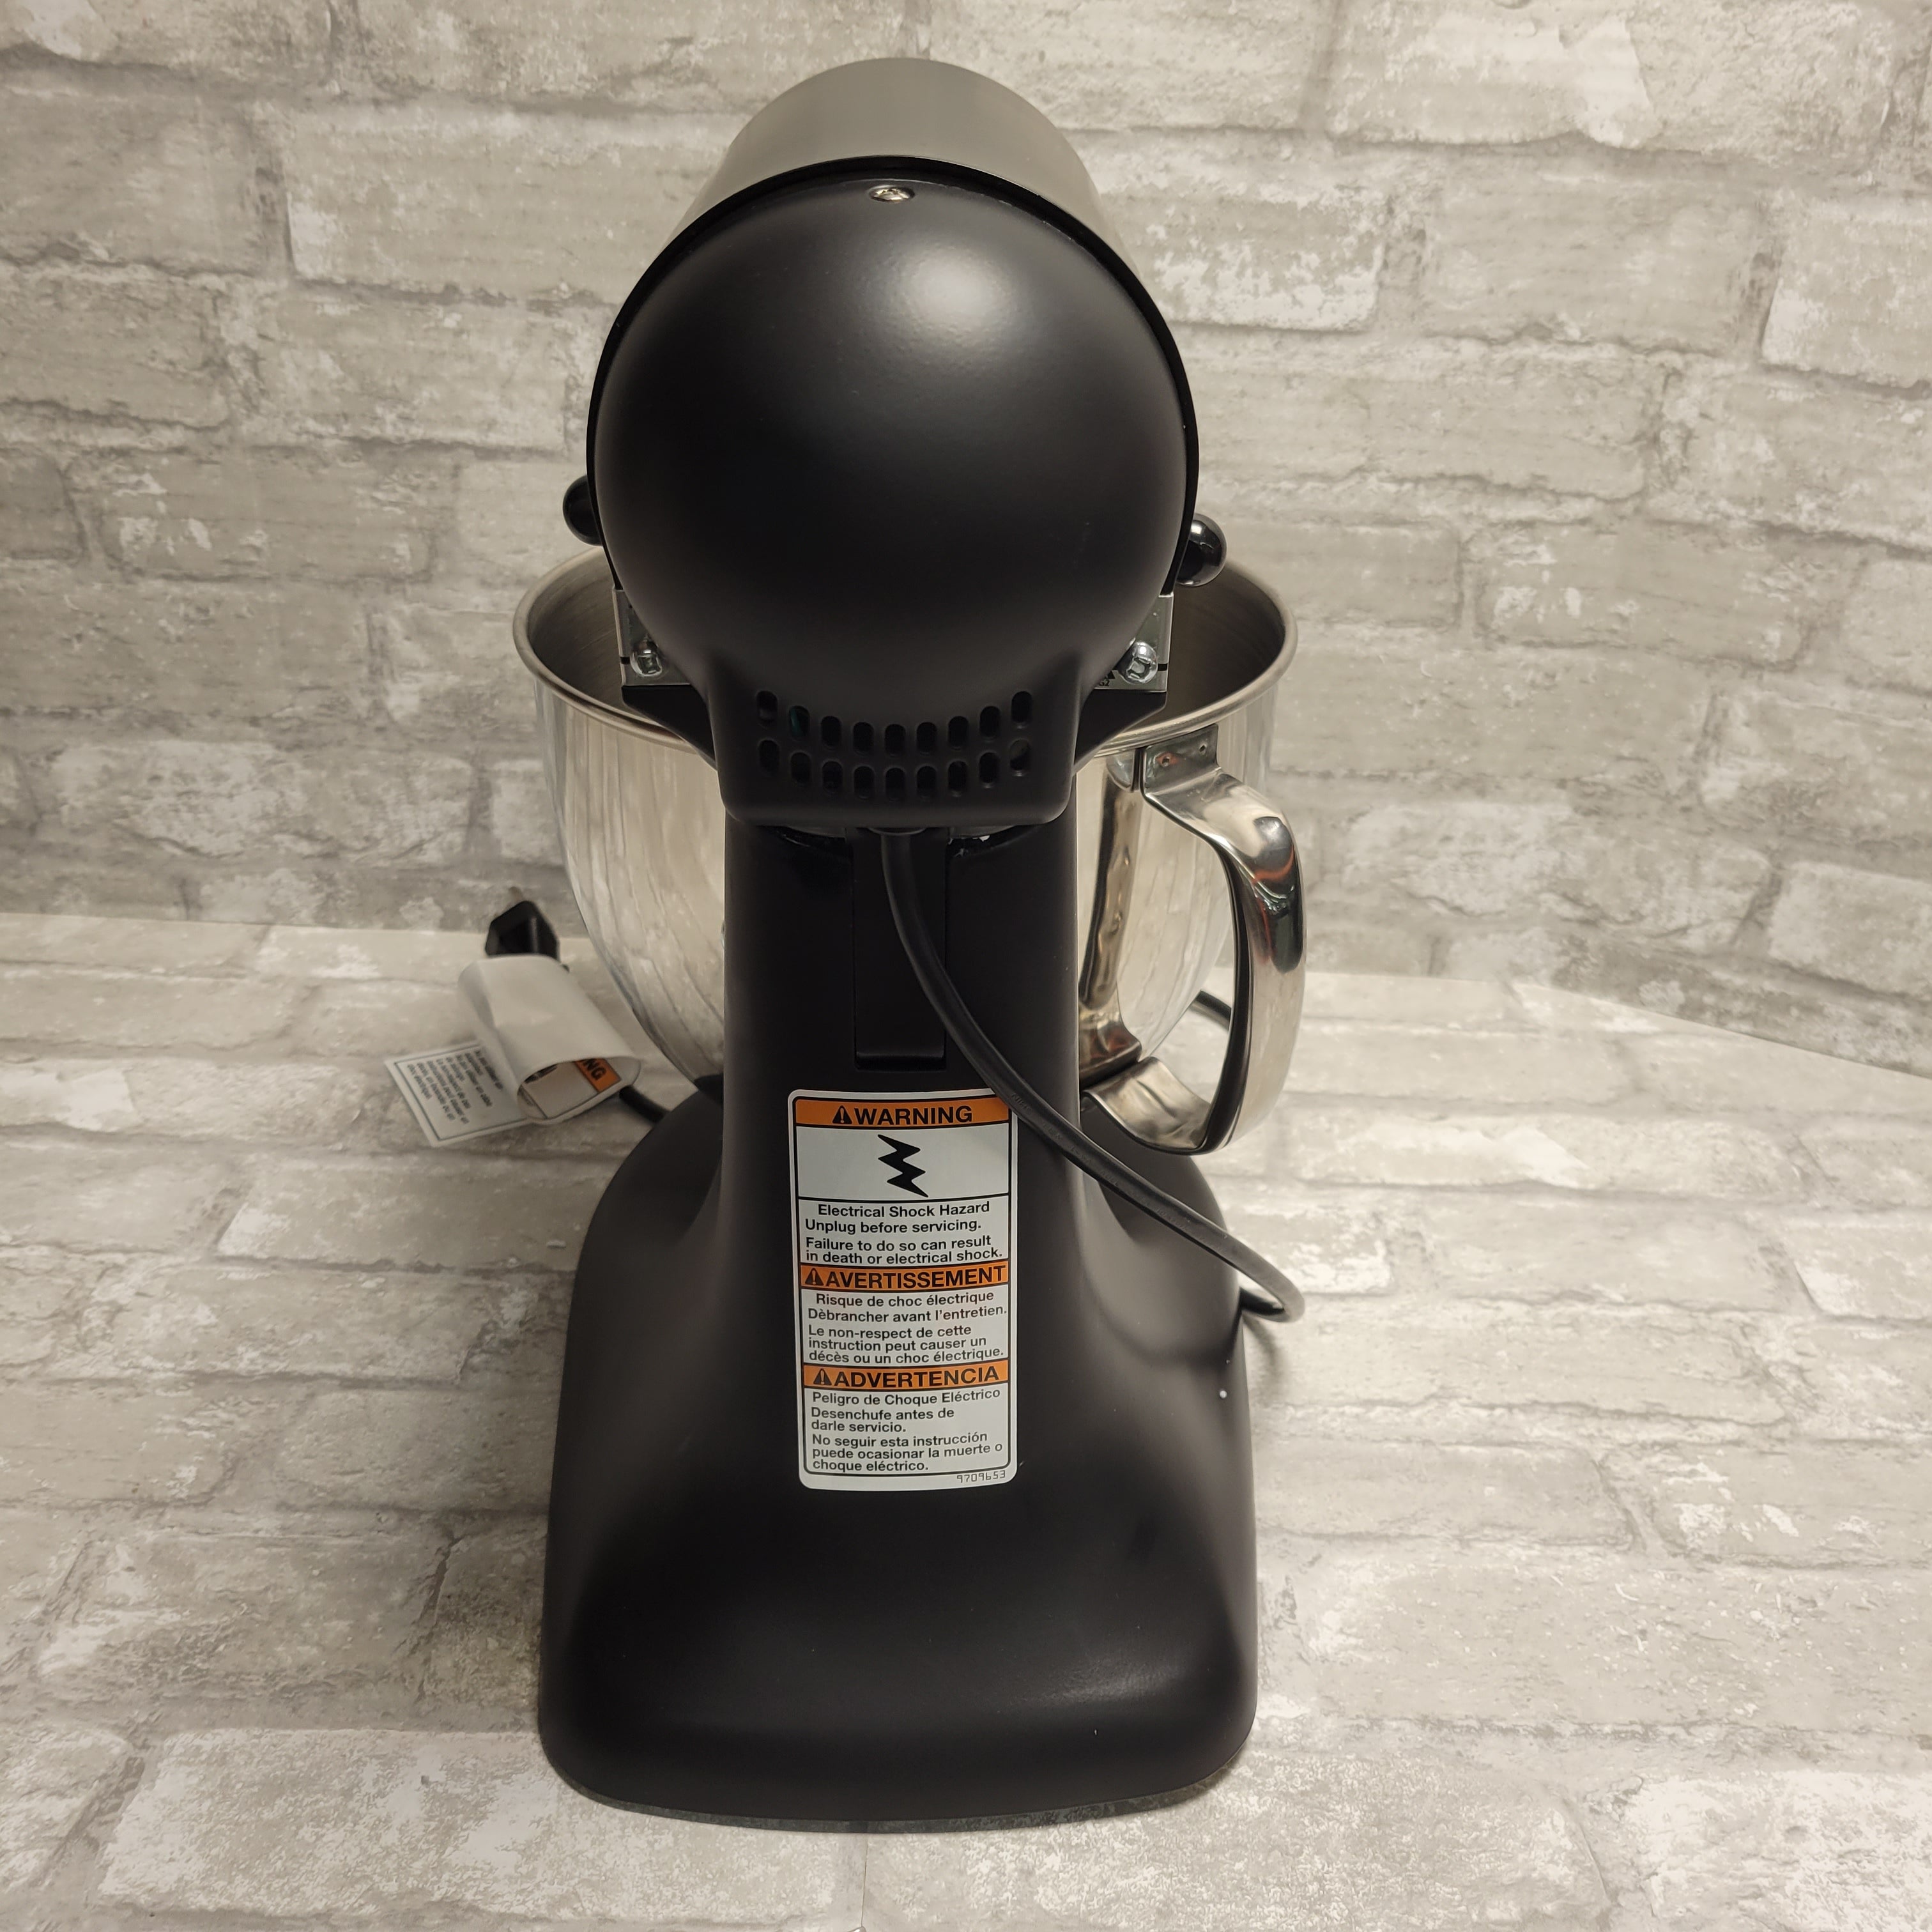 KitchenAid Deluxe 4.5qt Stand Mixer - Black (KSM97BM) for sale